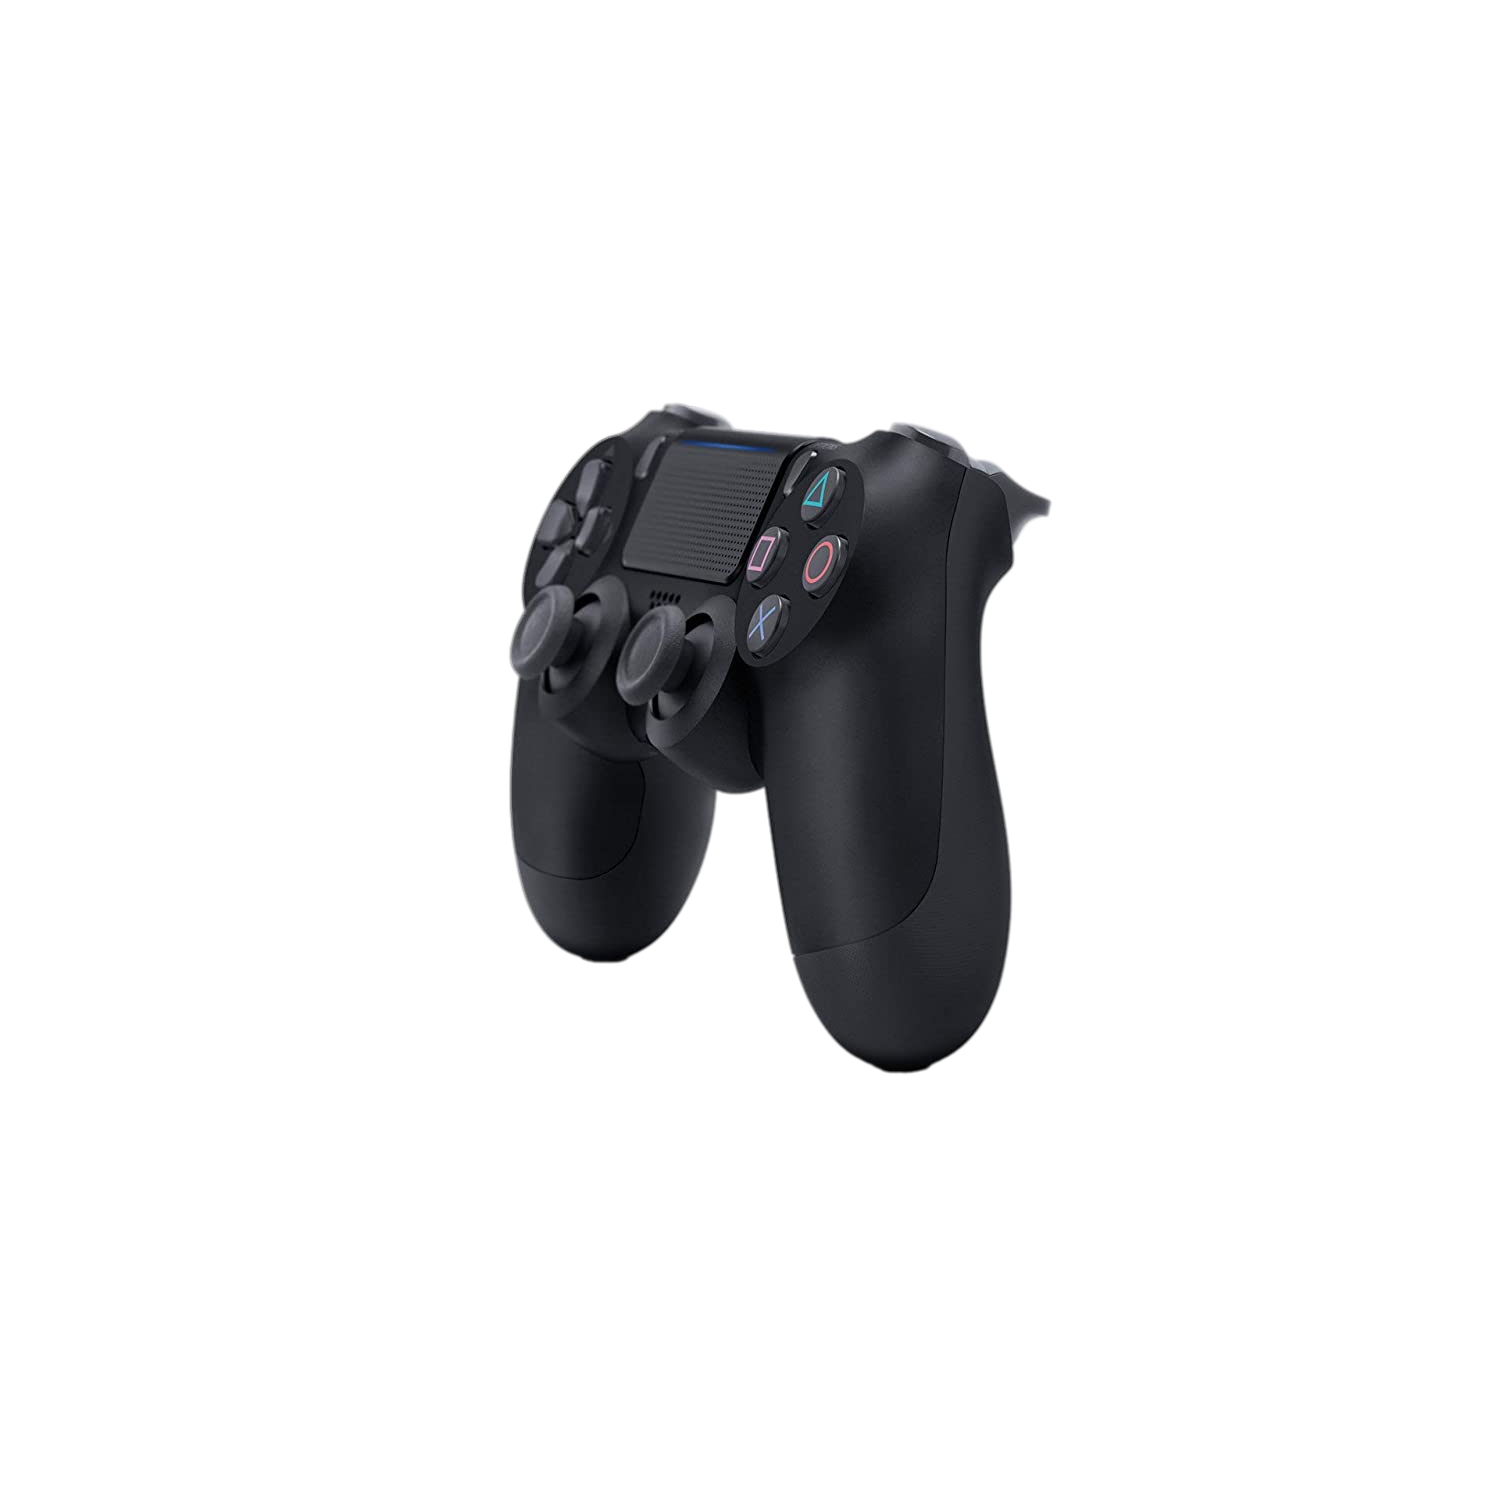 Sony-Official-PlayStation-DualShock-4-Controller-Black-3_641a8e73-b3c6-4f44-b8db-5de4fecbbcb0